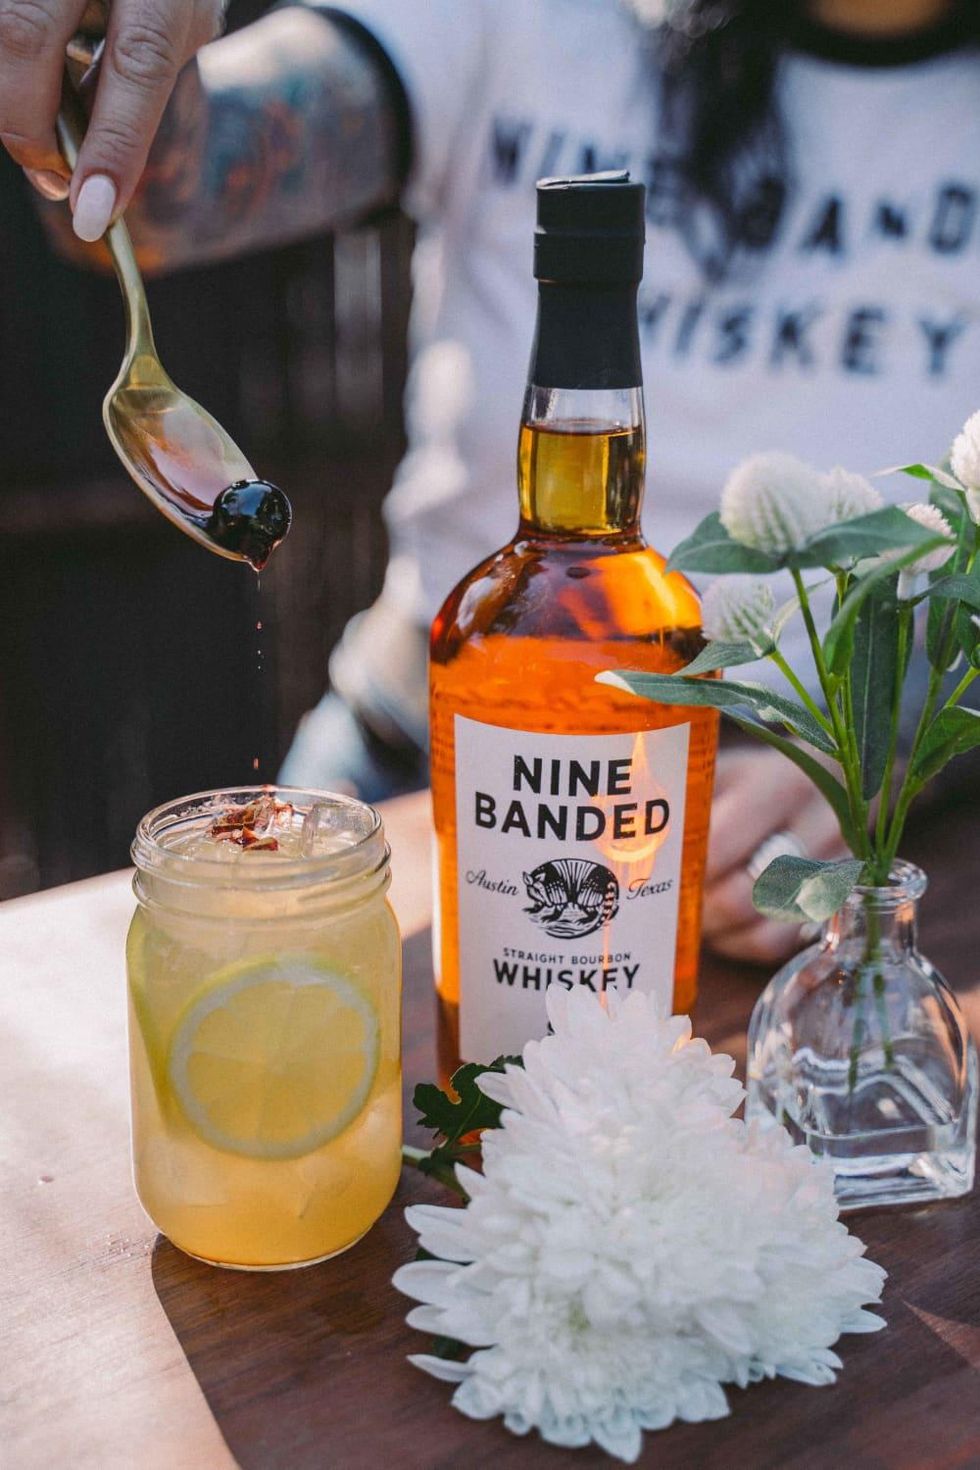 Nine Banded Whiskey cocktail